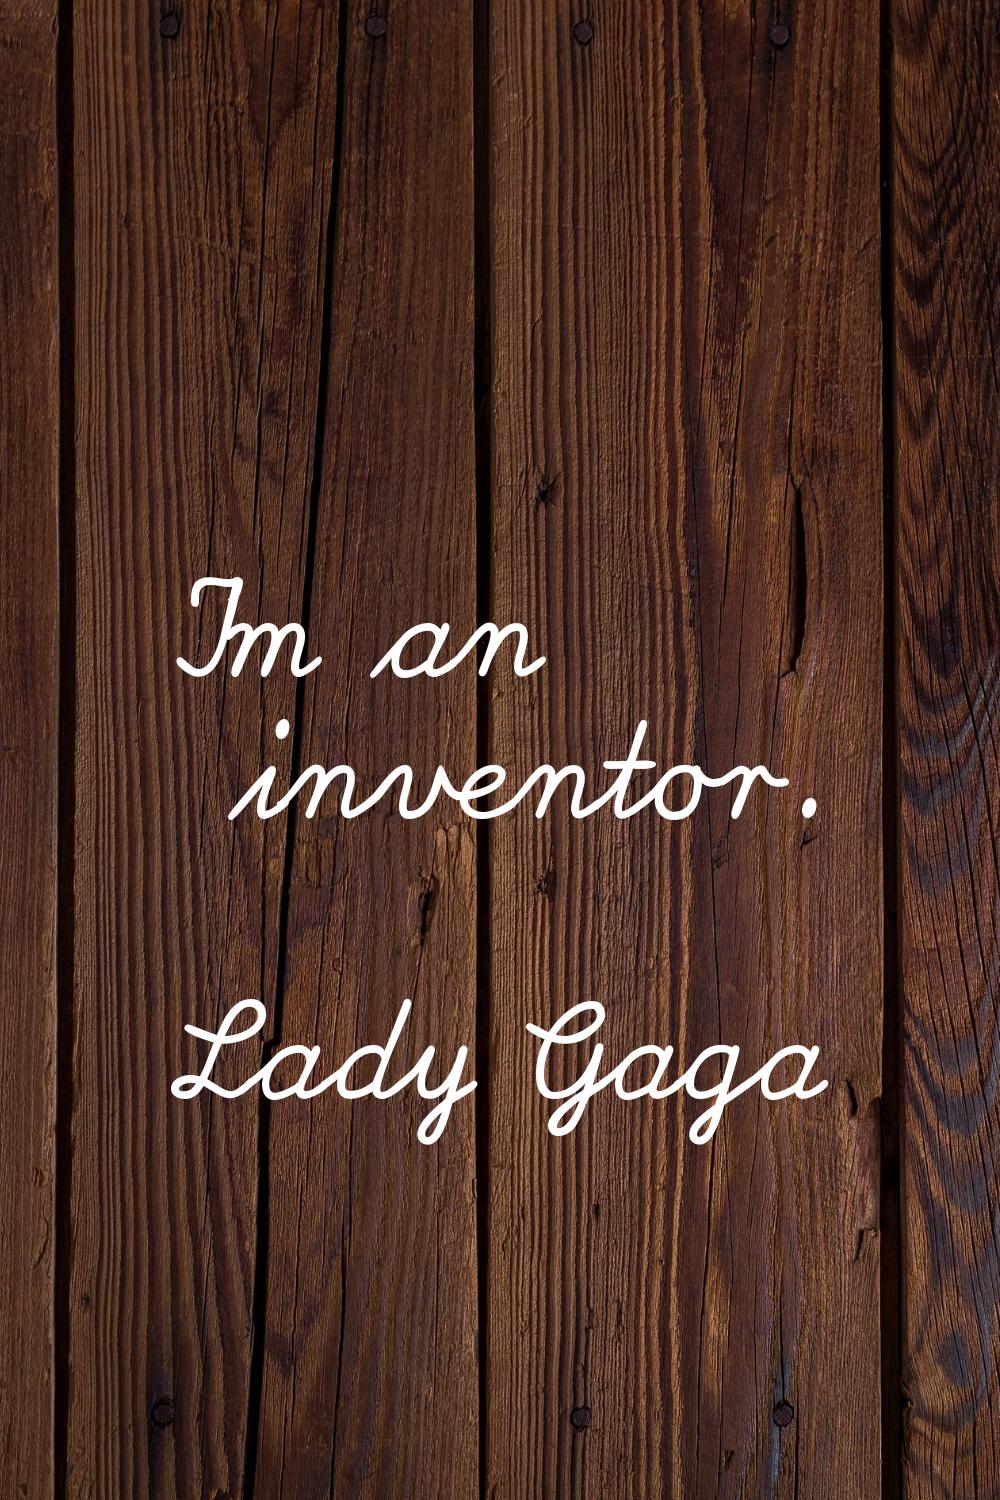 I'm an inventor.